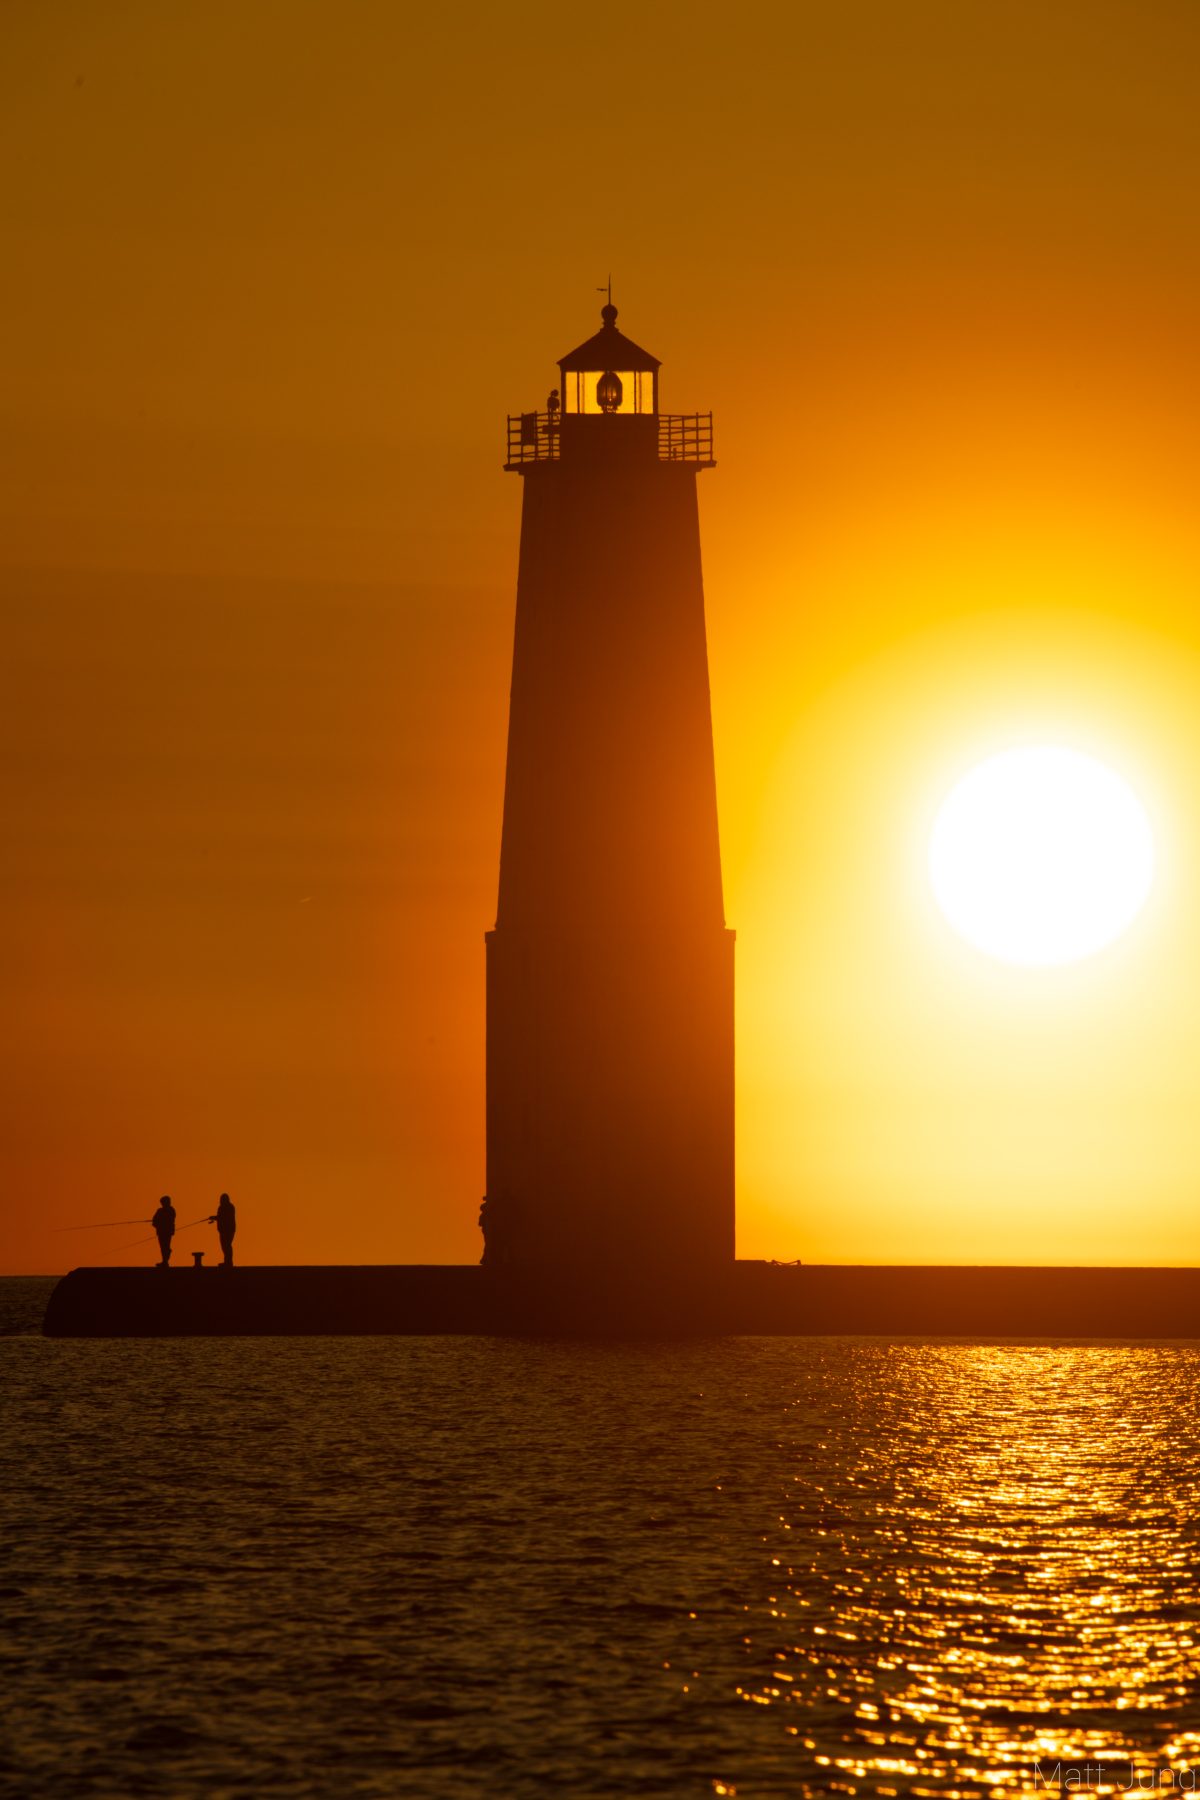 Frankfort Lighthouse at sunset